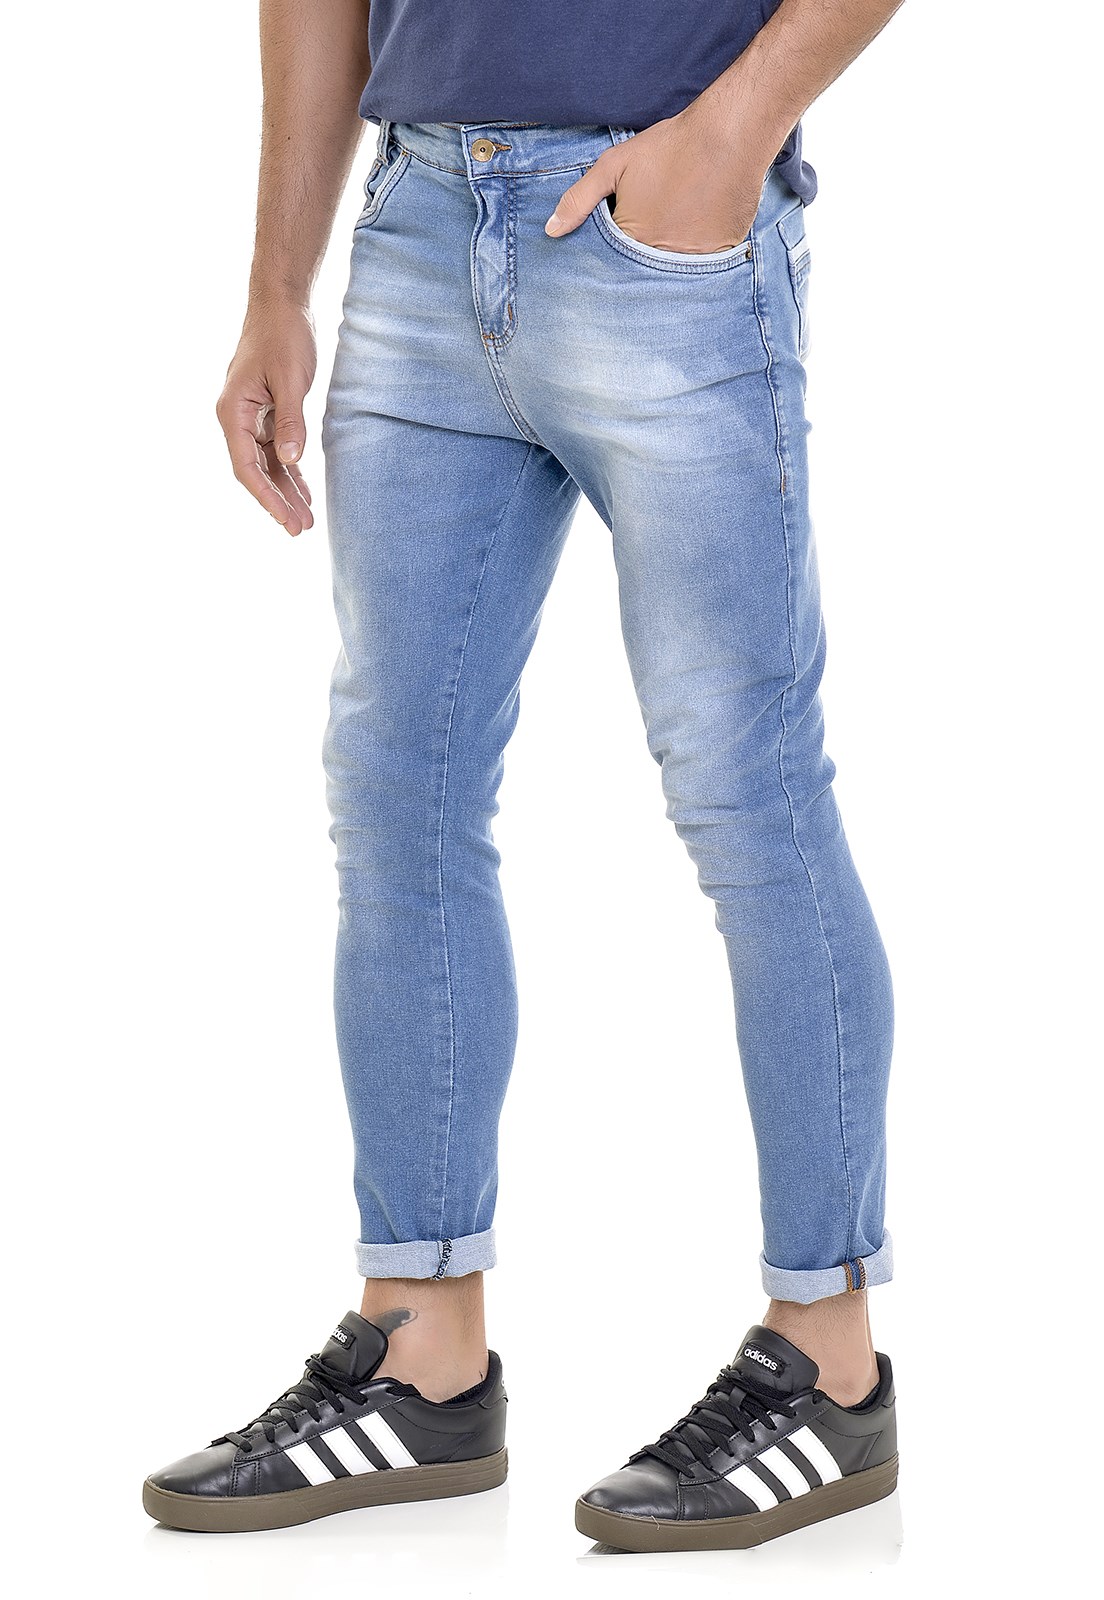 dobrar calça jeans masculina